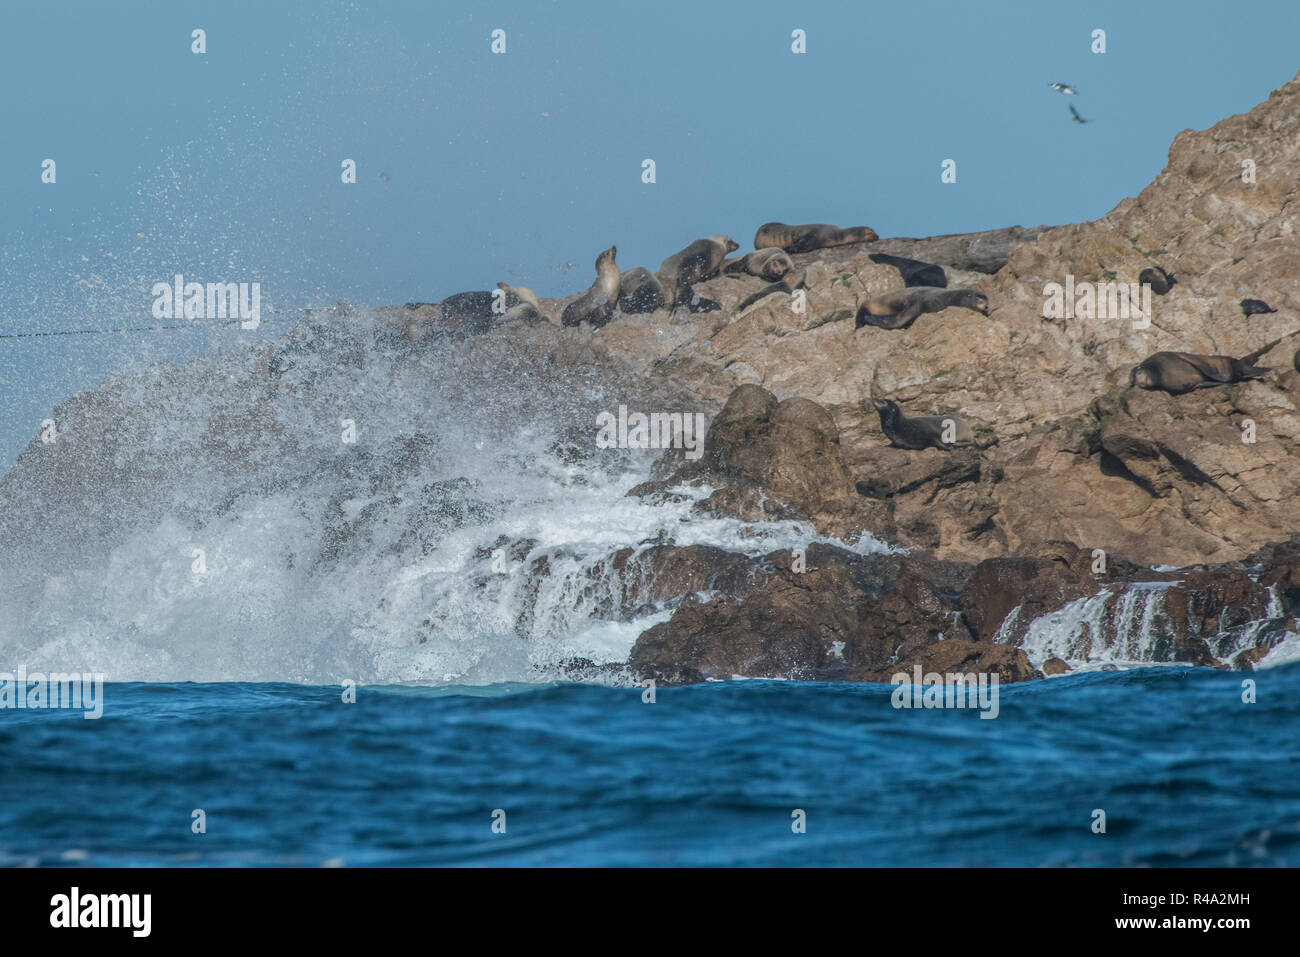 A colony of sea lion at the Farallon islands, California. Stock Photo